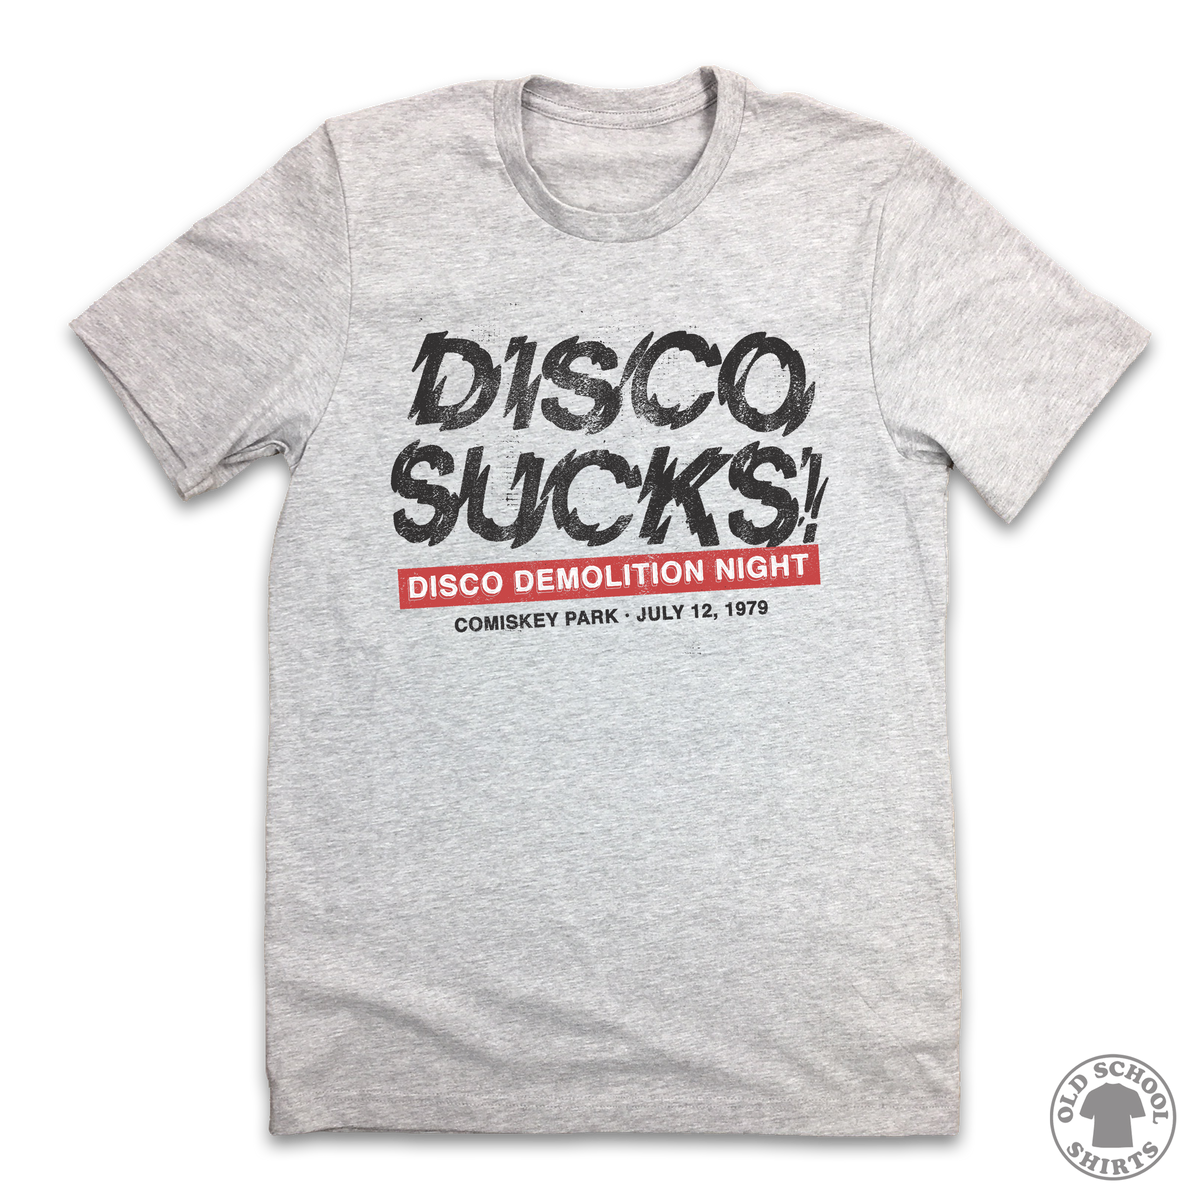 Disco Sucks! - Disco Demolition Night - Old School Shirts- Retro Sports T Shirts